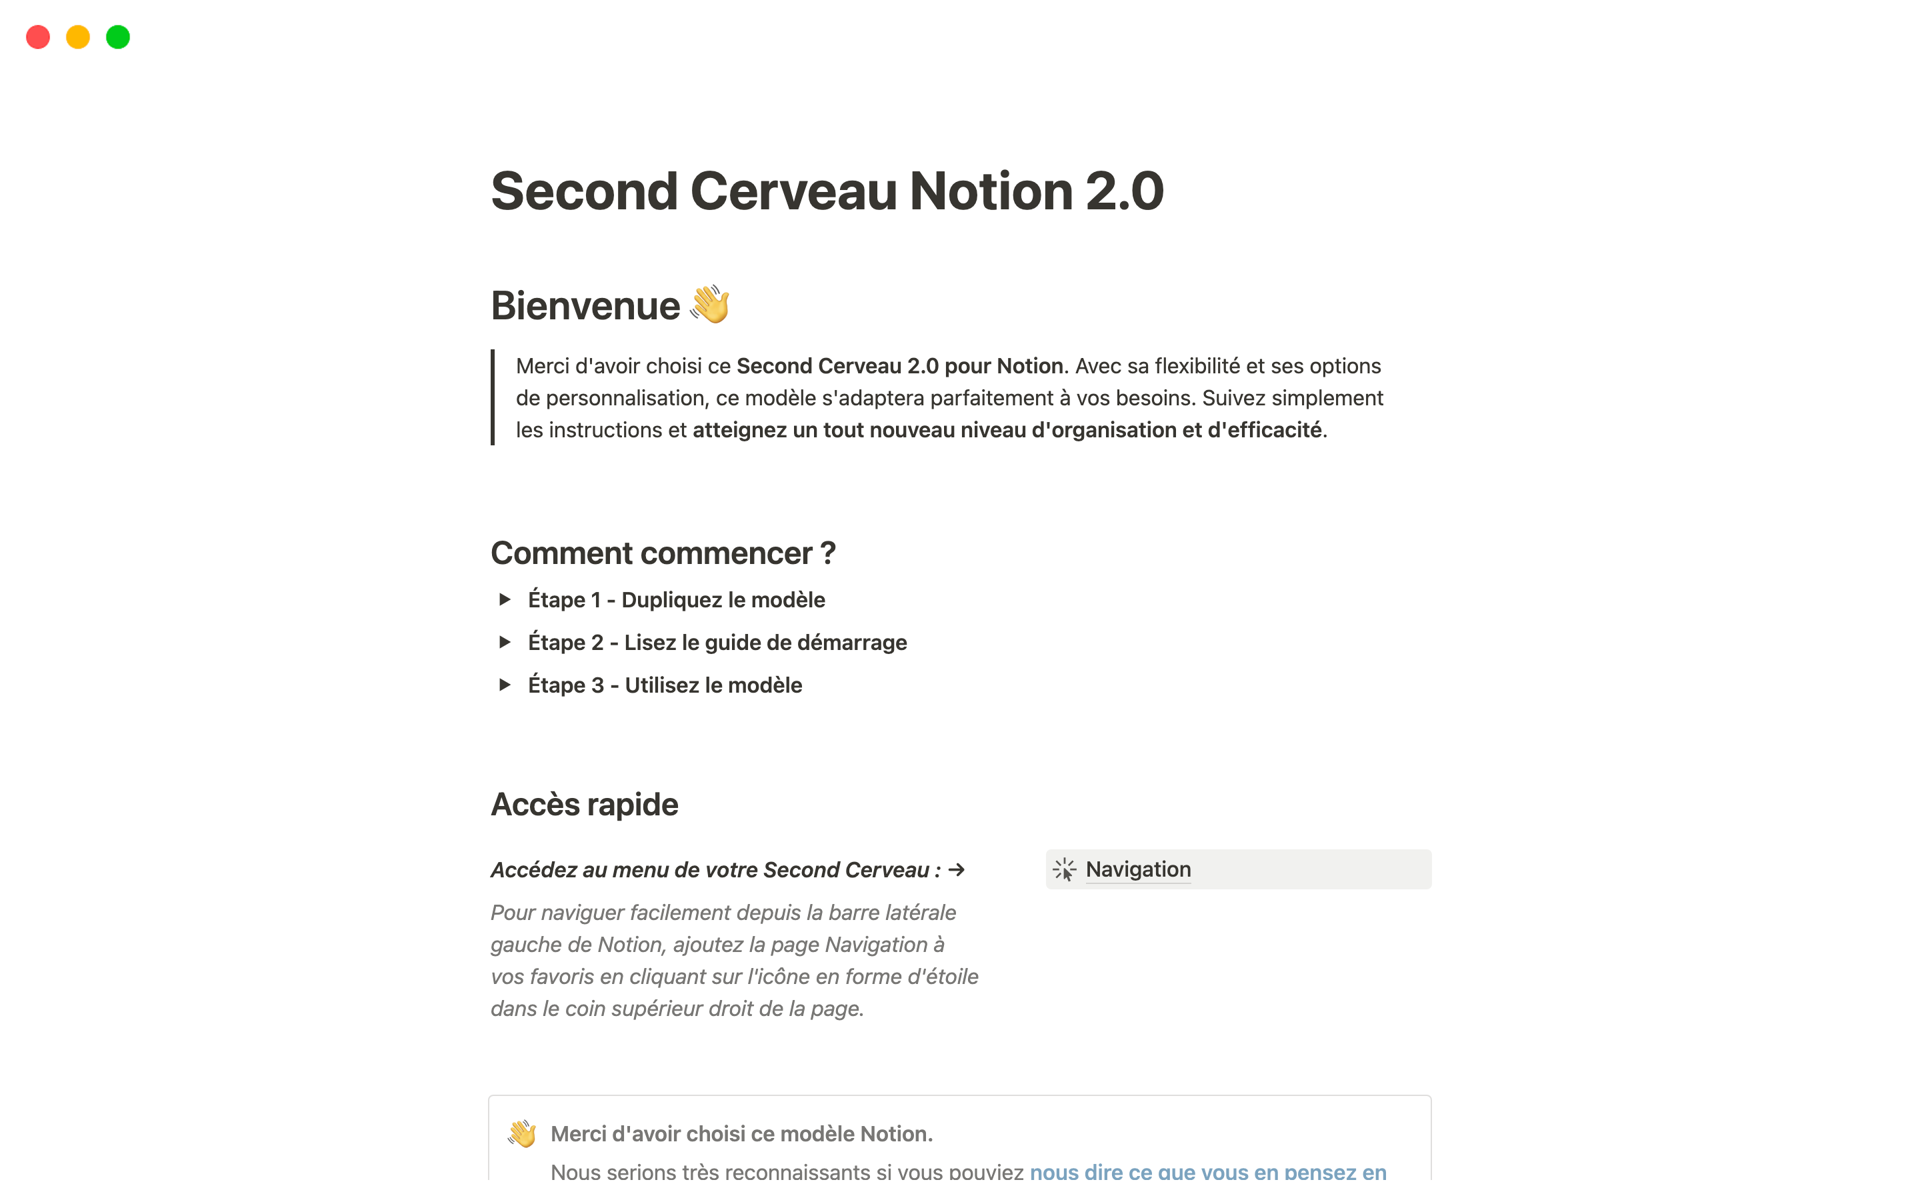 A template preview for Second Cerveau Notion 2.0